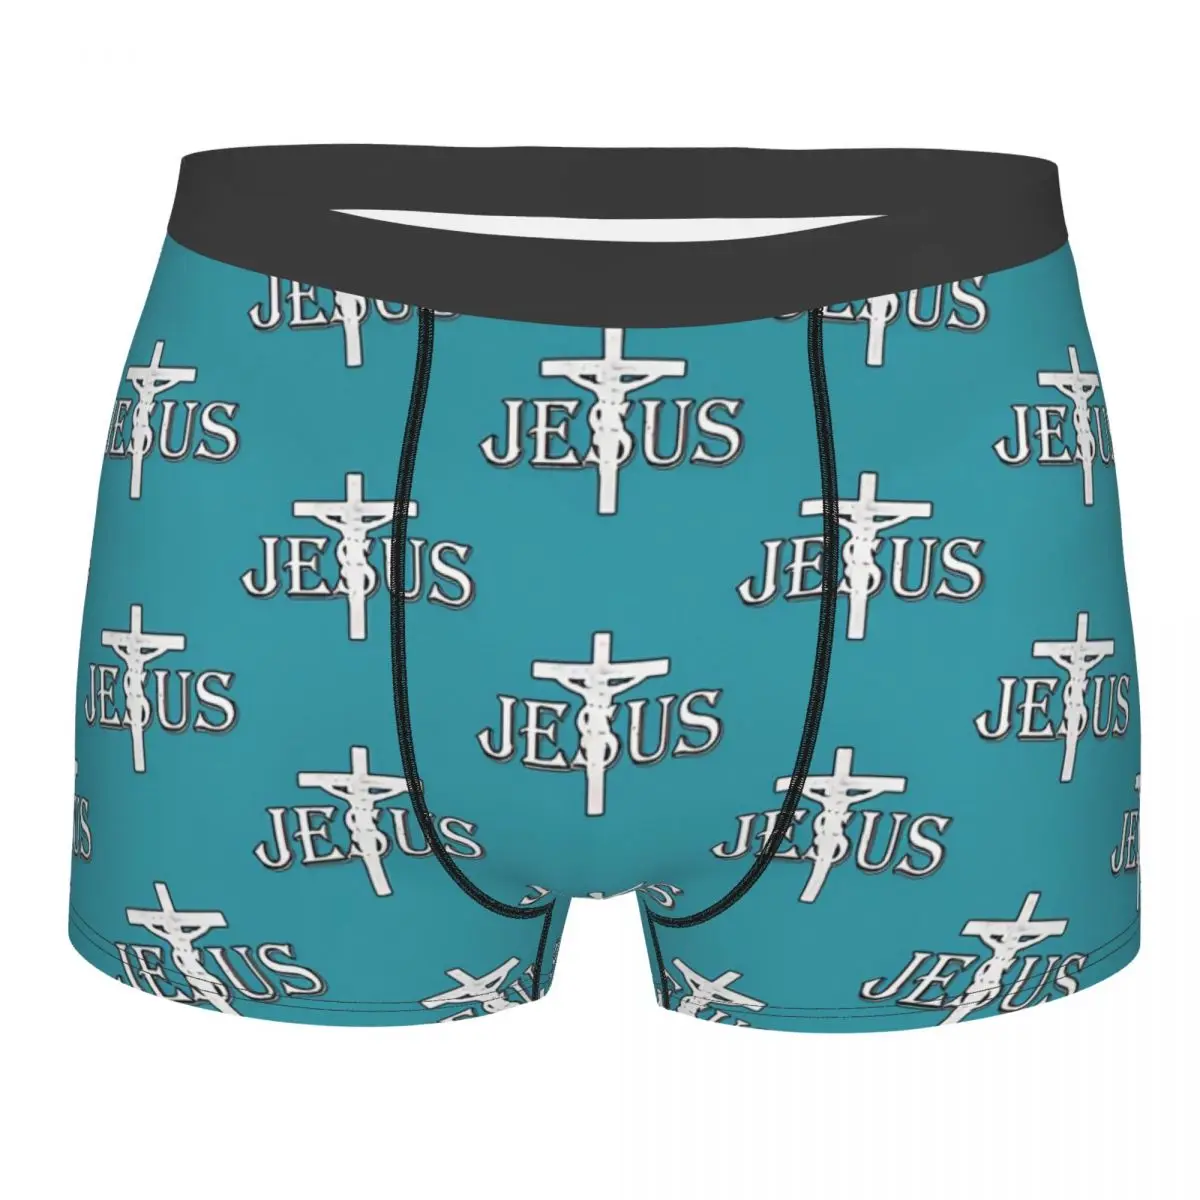 

Jesus Meskel Ethiopian Cross Art Ethiopia Underpants Cotton Panties Male Underwear Comfortable Shorts Boxer Briefs